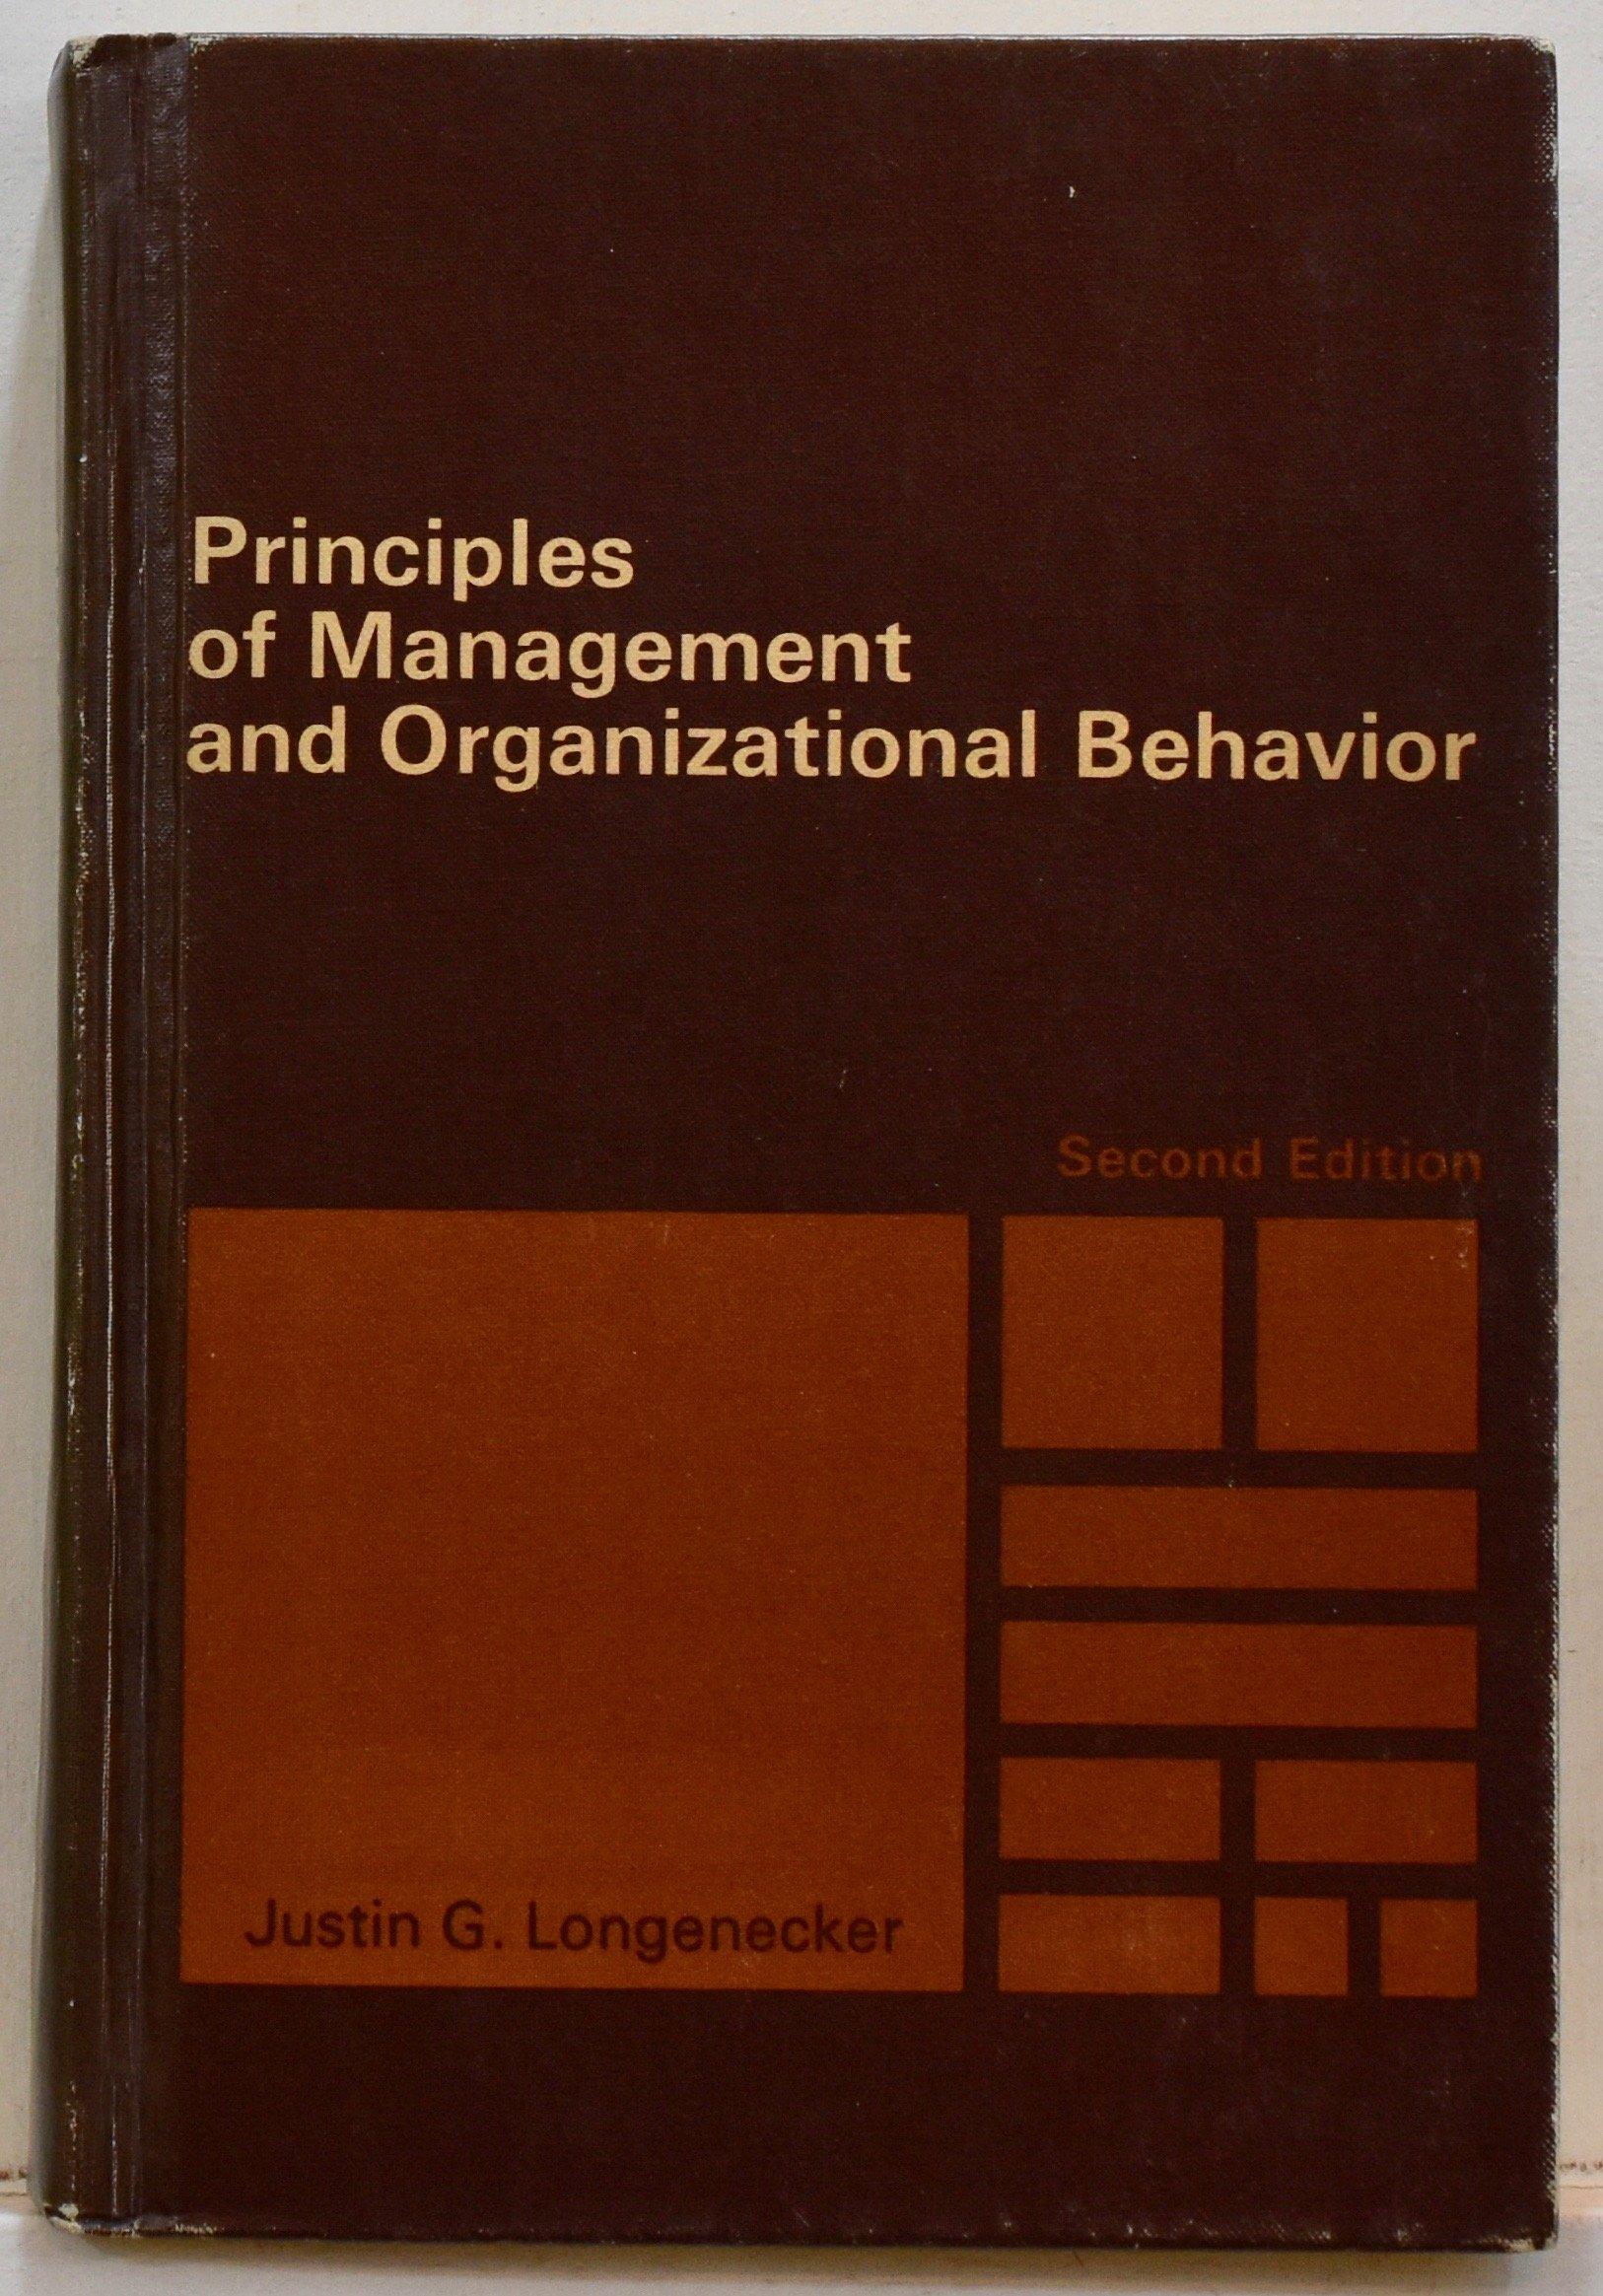 principles of management and organizational behavior 2nd edition justin g. longenecker 067509576x,